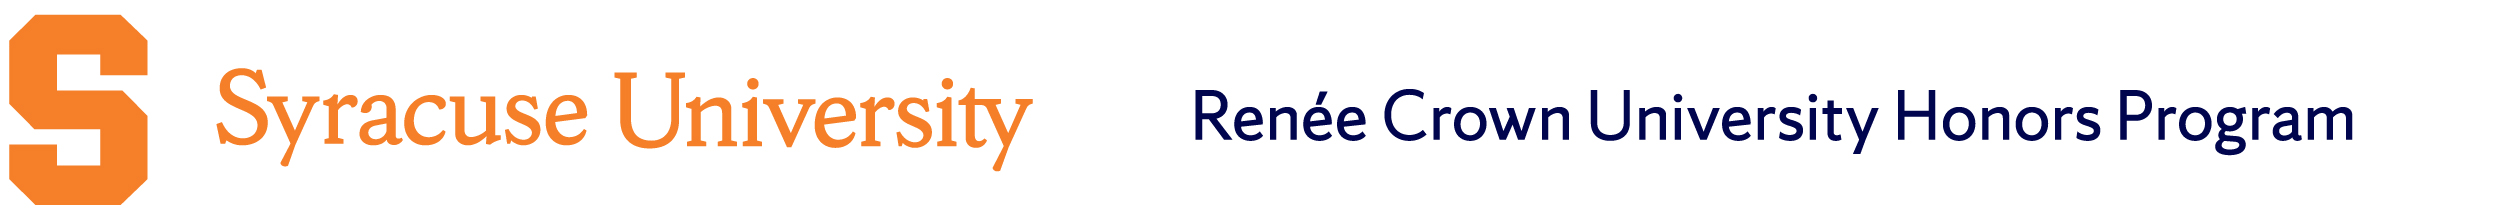 Renee Crown University Honors Program logo